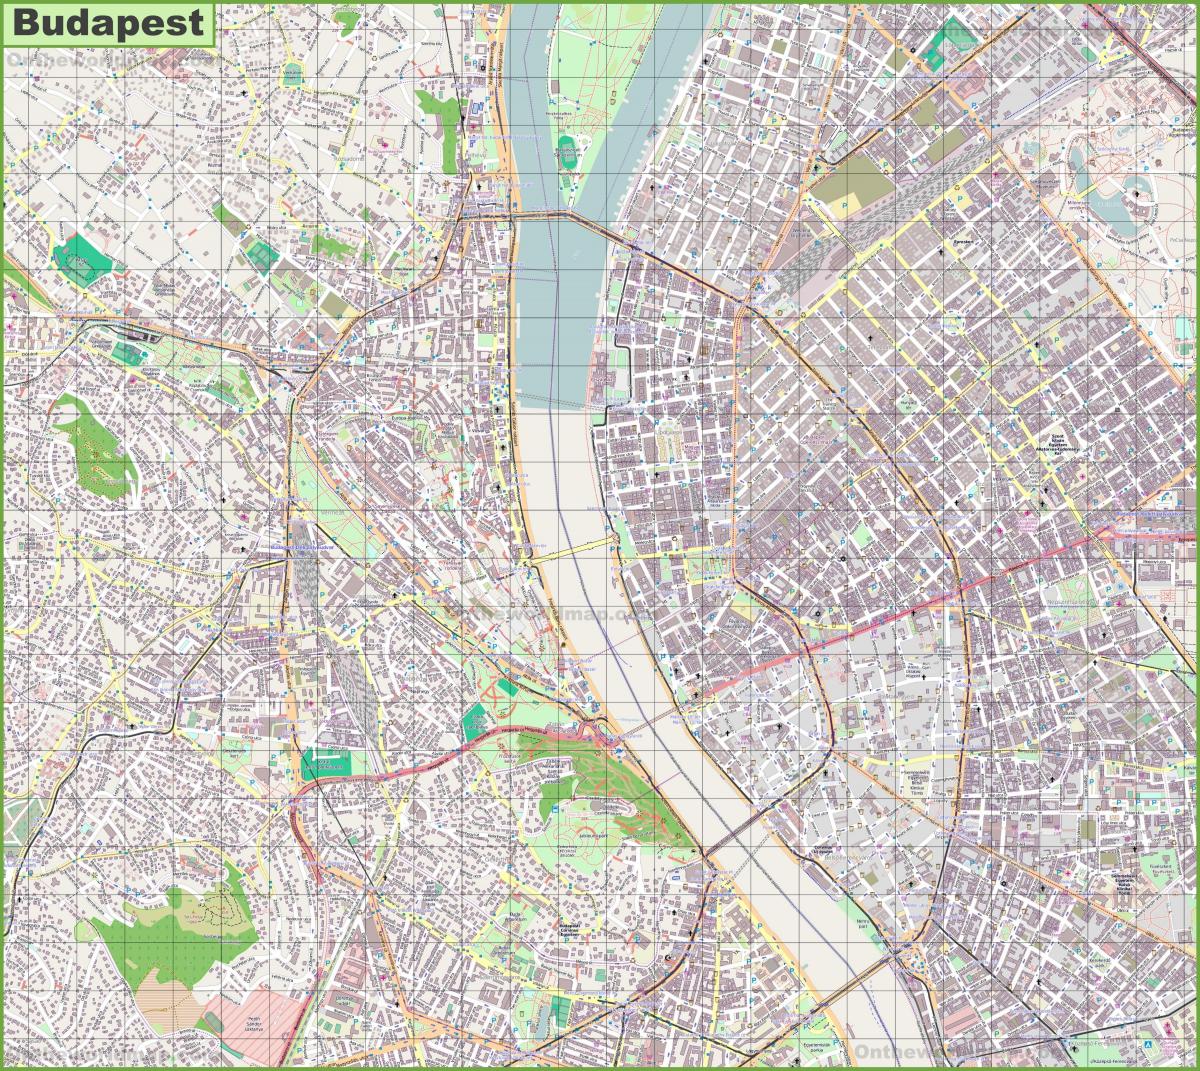 kale-mapa budapest, hungaria